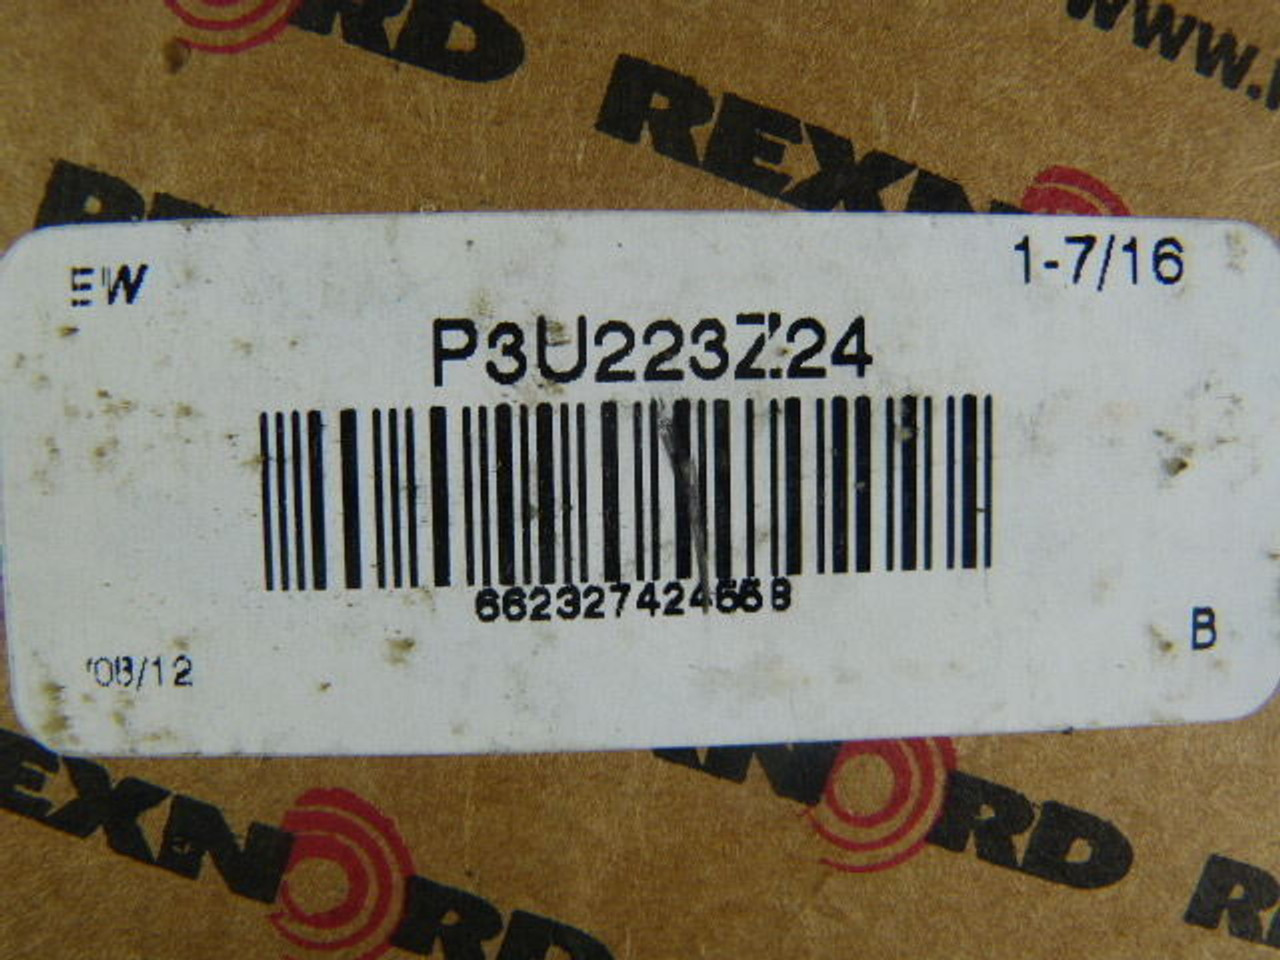 Rexnord P3U223Z24 Link-Belt Bearing Block 1-7/16" ! NEW !